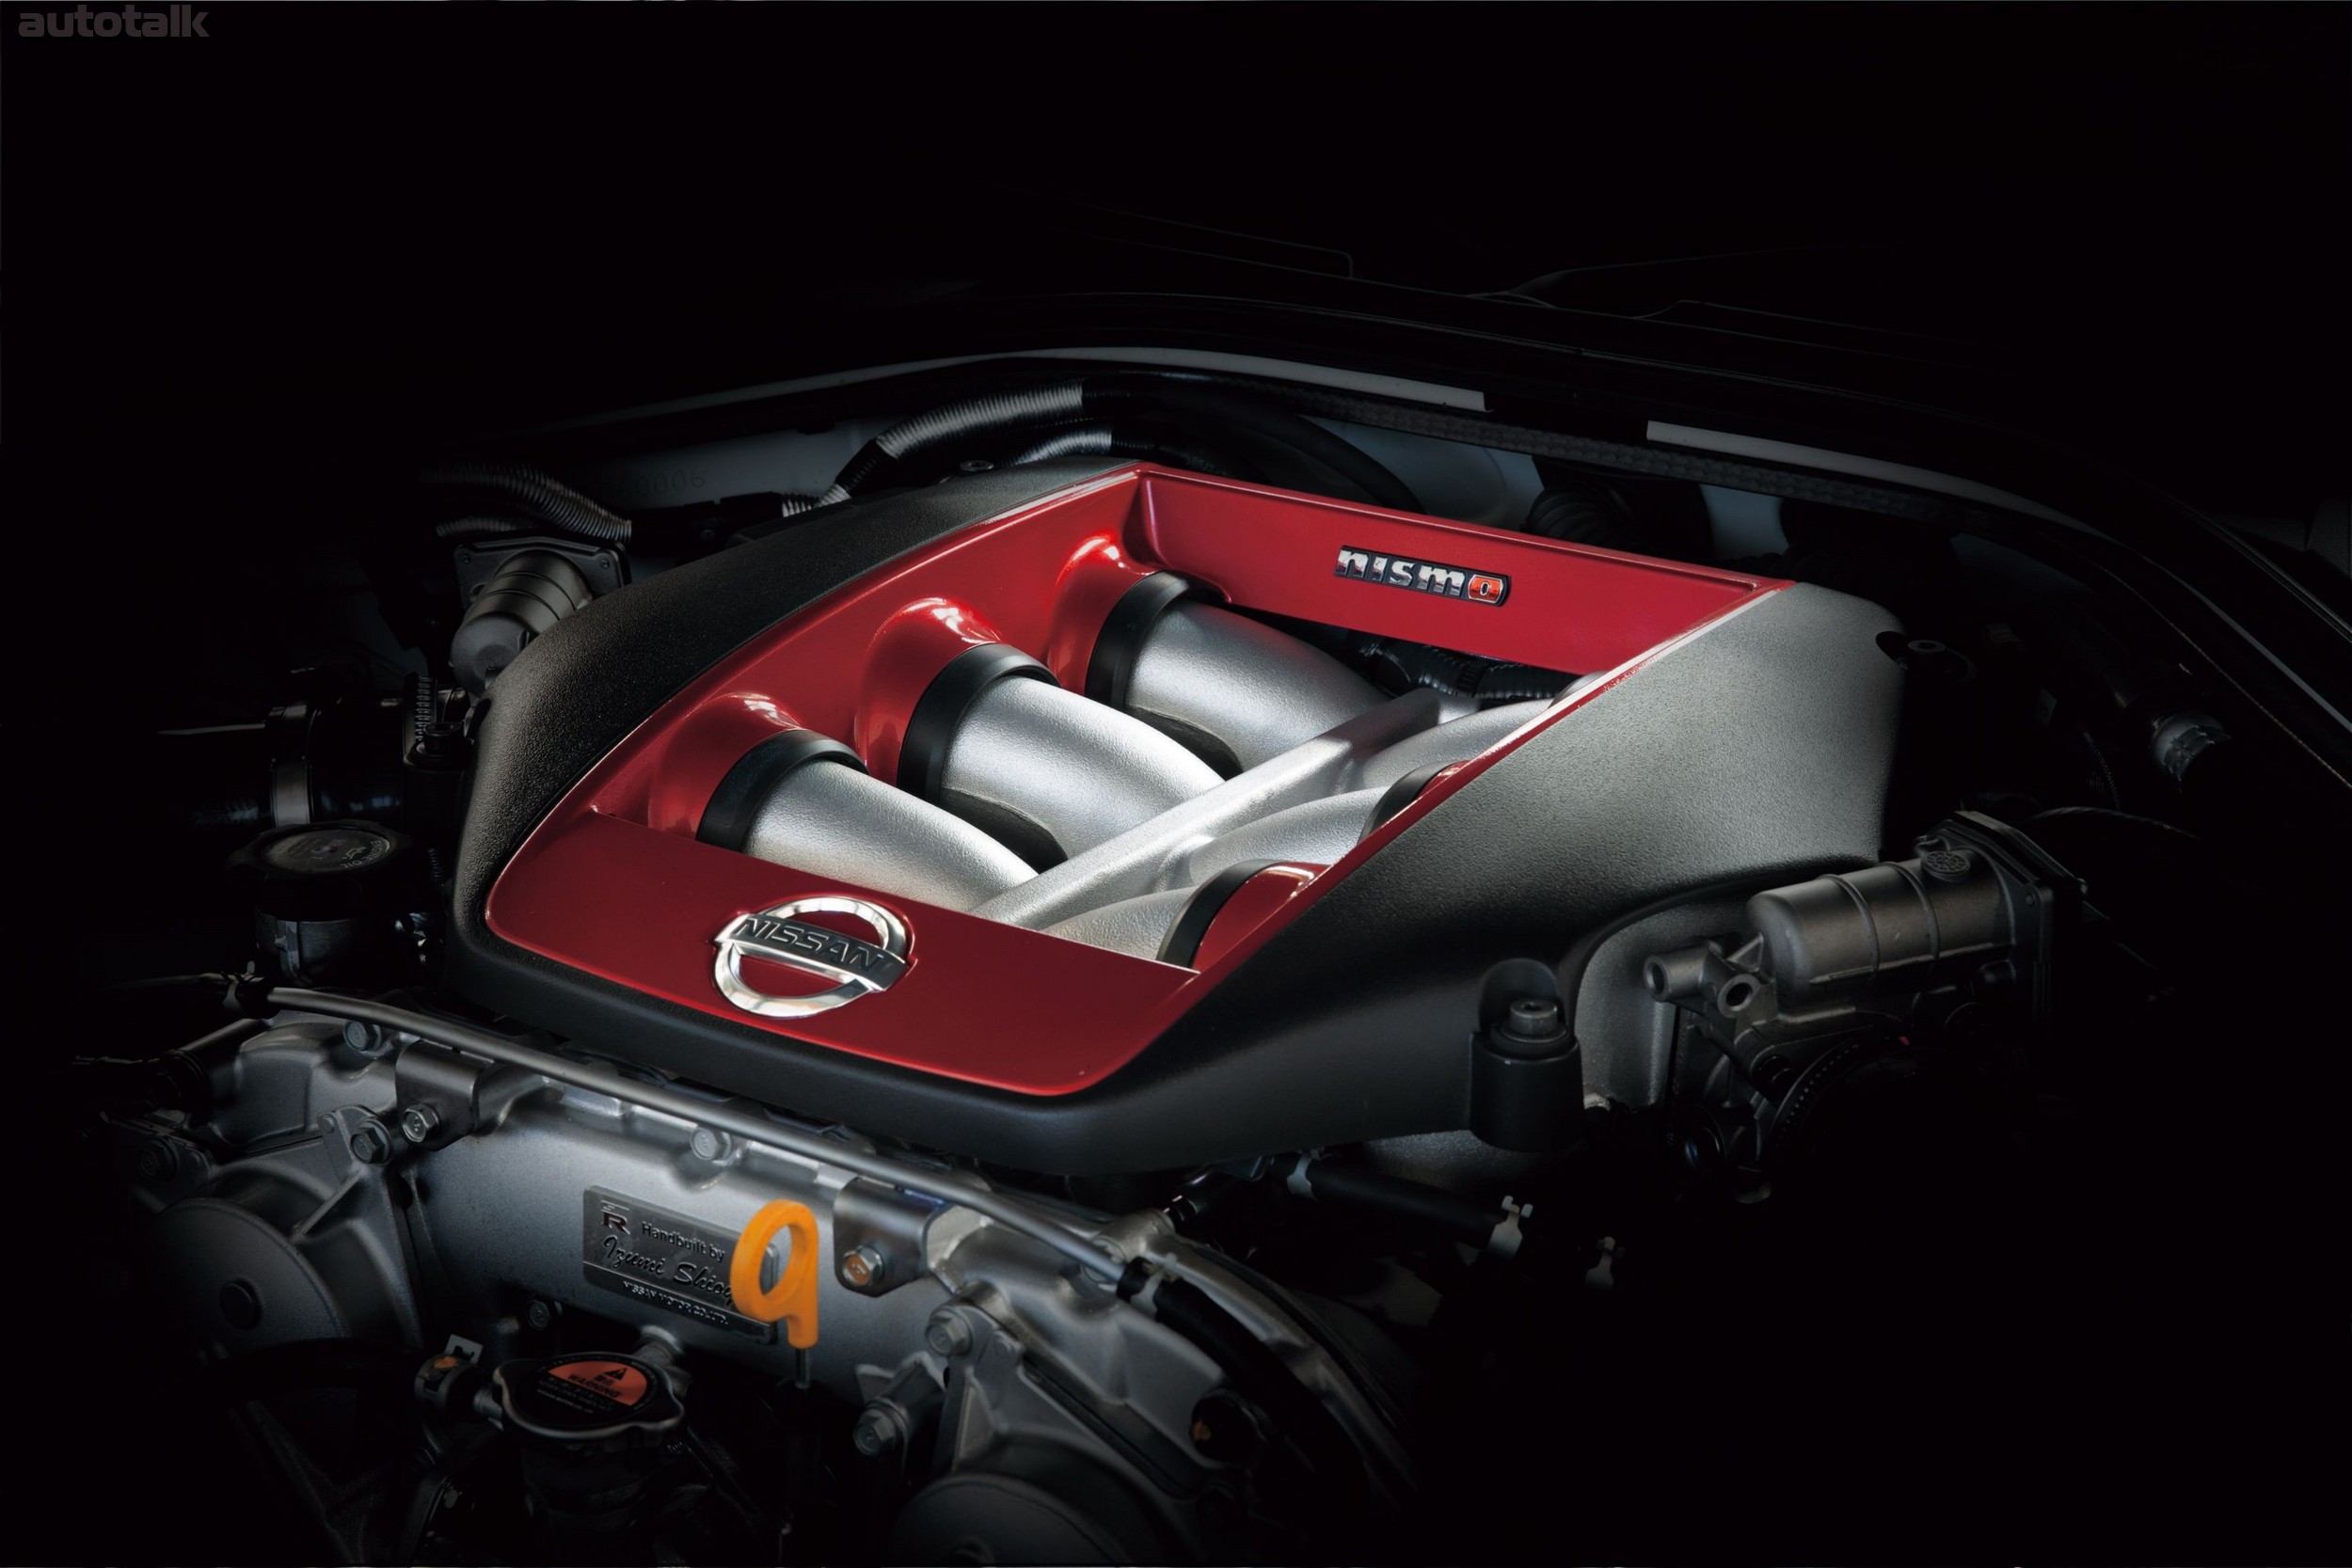 2015 Nissan NISMO GT-R